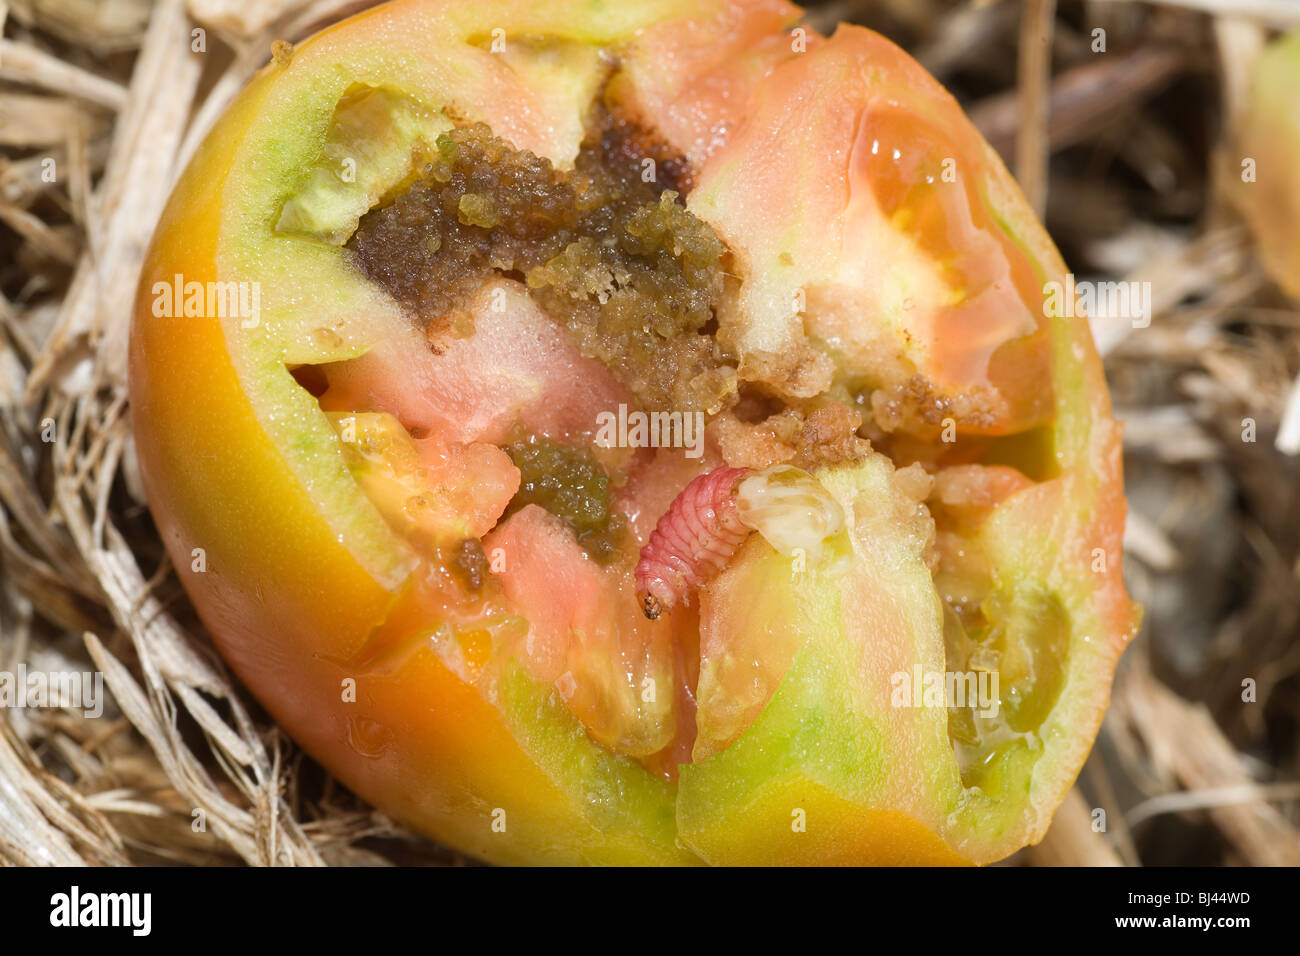 Tomatoe / tomato Helios species fruitworm destroying the inside of a perfectly good tomato / tomatoe Stock Photo